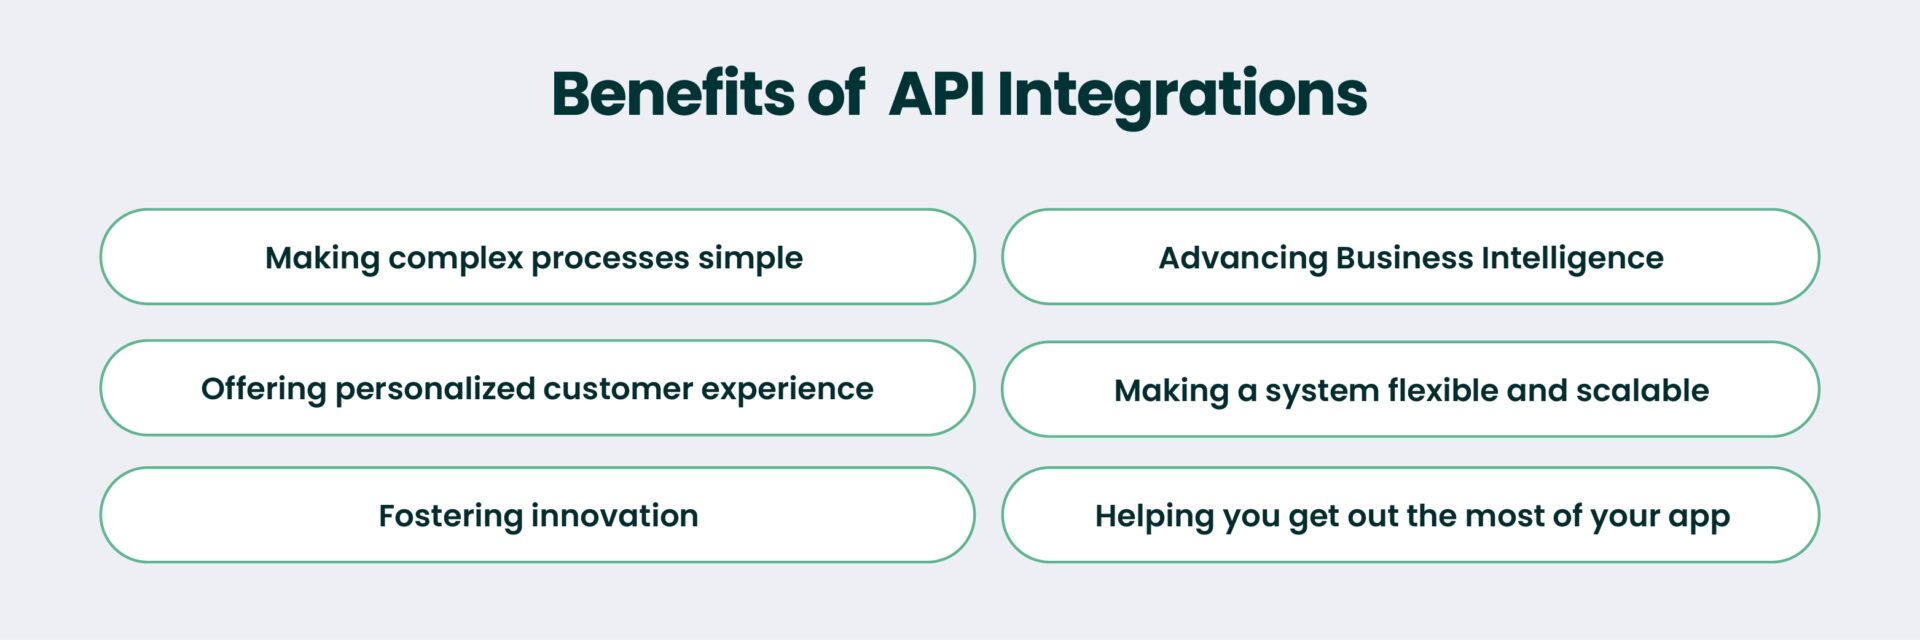 Benefits of API Integrations